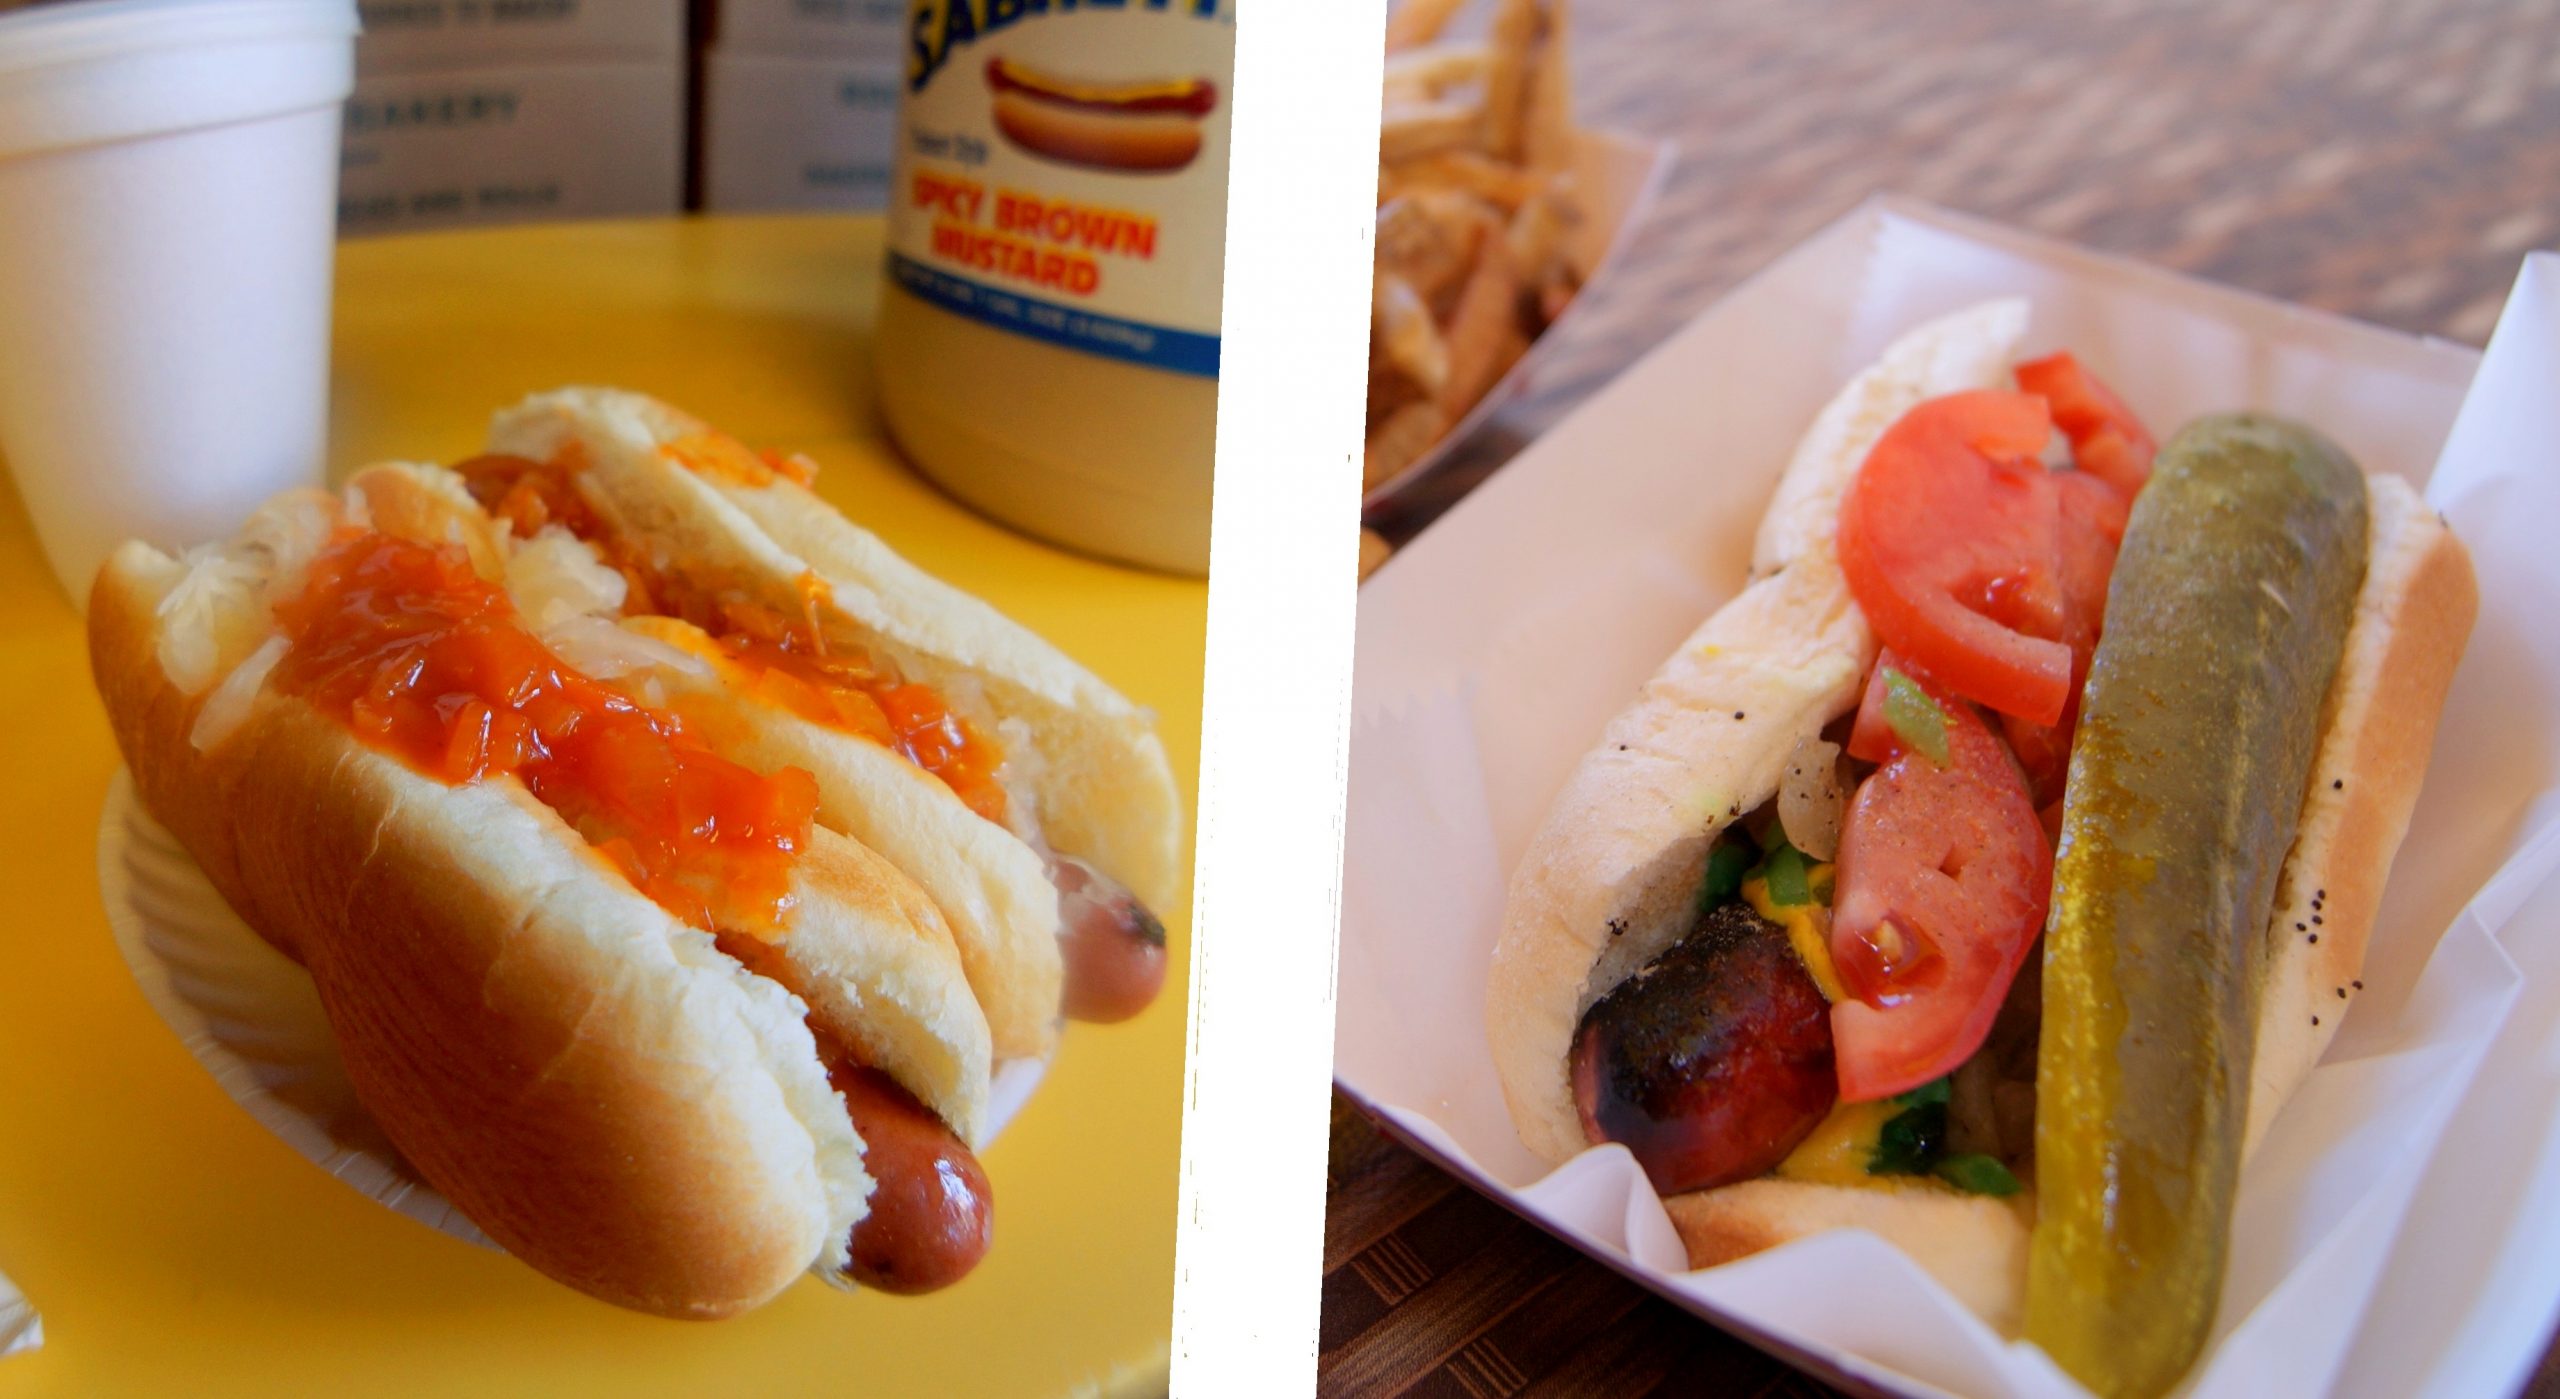 New York Style Hot Dog vs Chicago Style Hot Dog